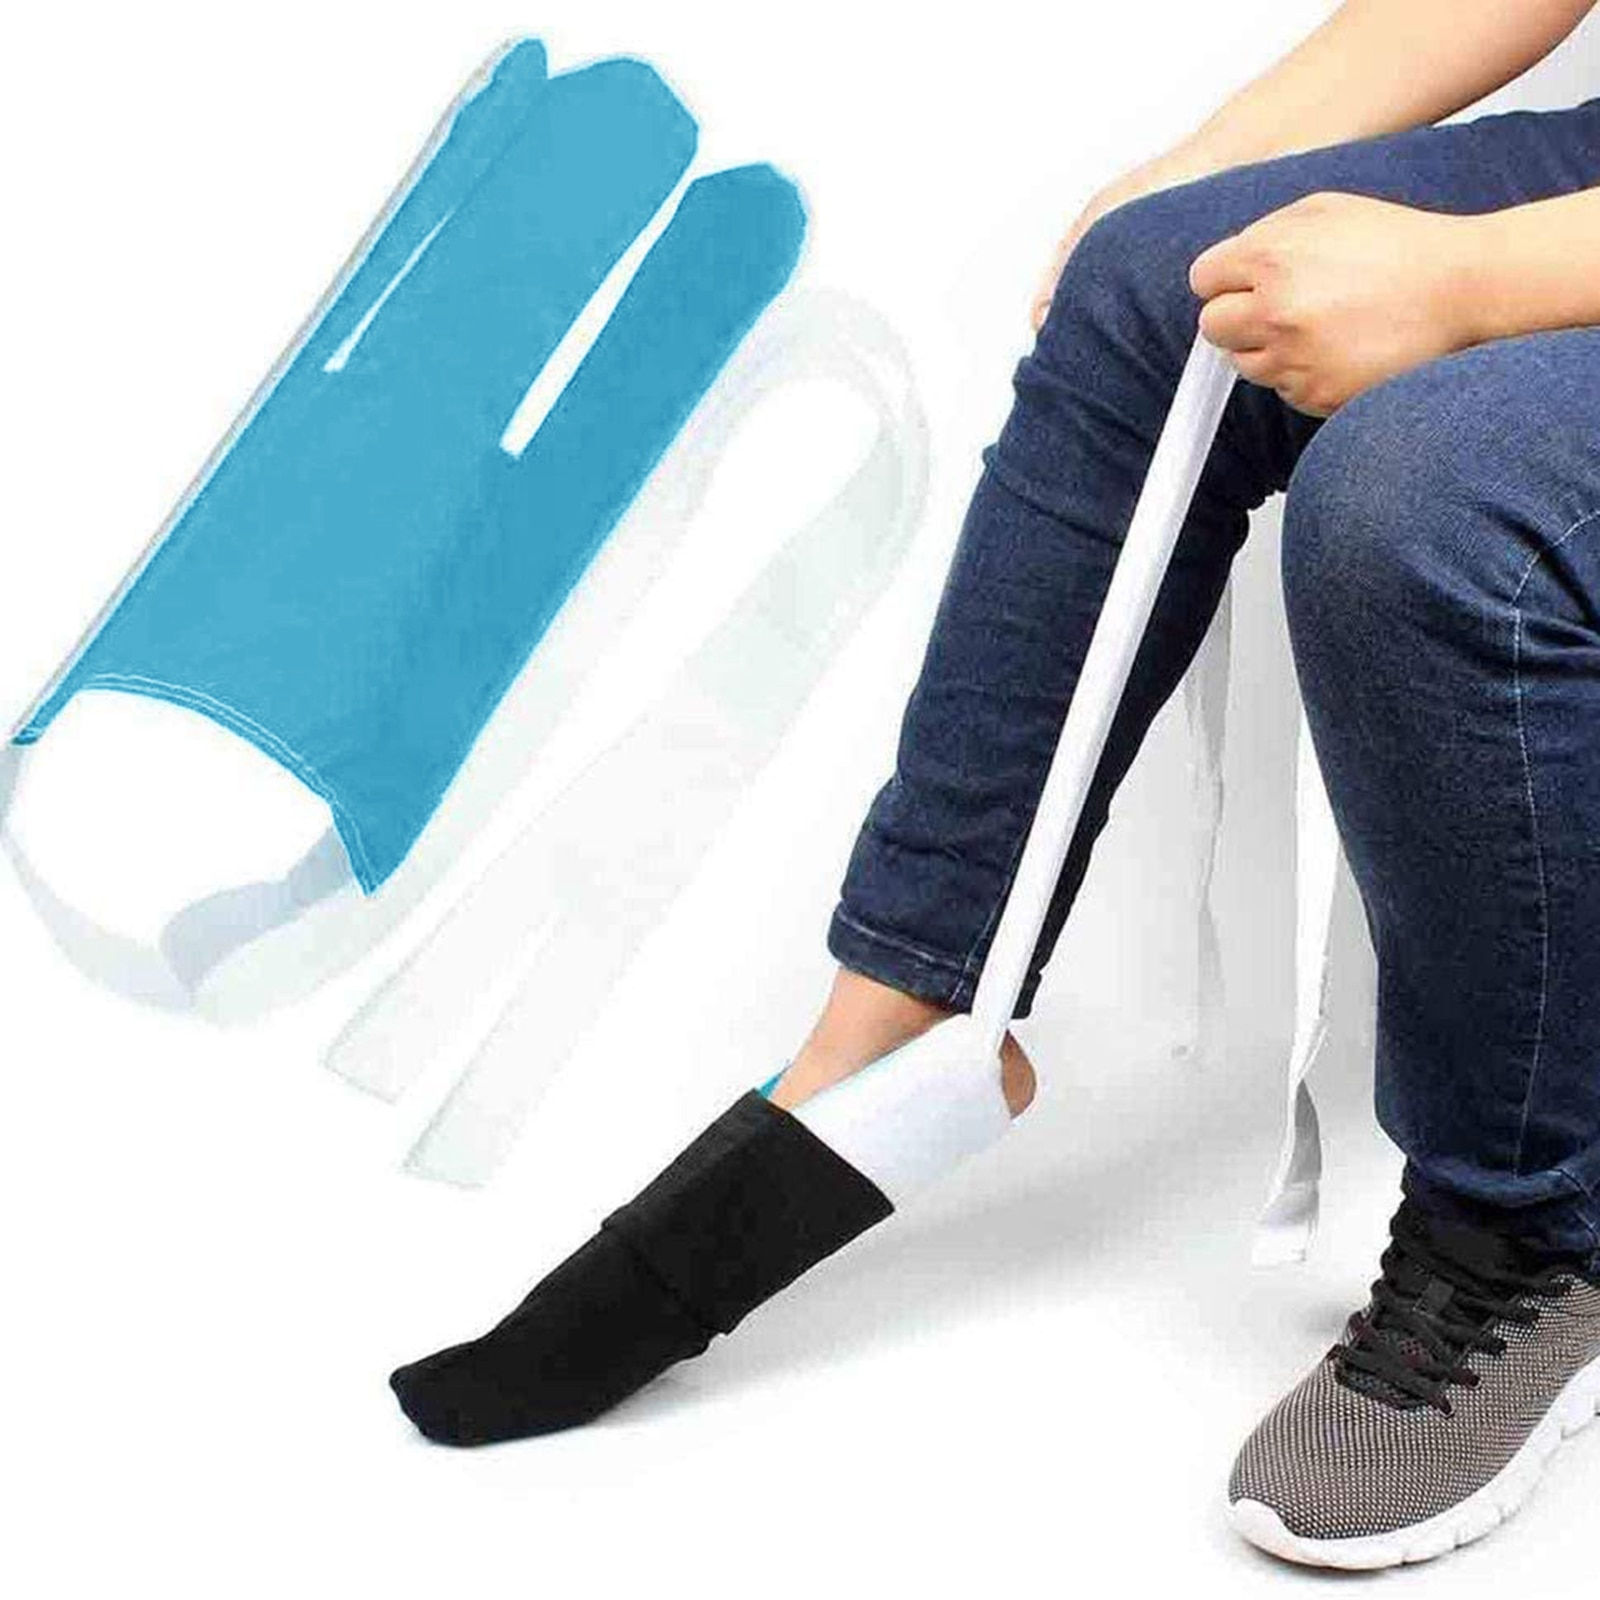 Flexibele Sok Aid Kit Slider Sok Helper Aide Tool Voor Putting Op Sokken Mannen Vrouwen Ouderen Sok Assist Device Sok puller